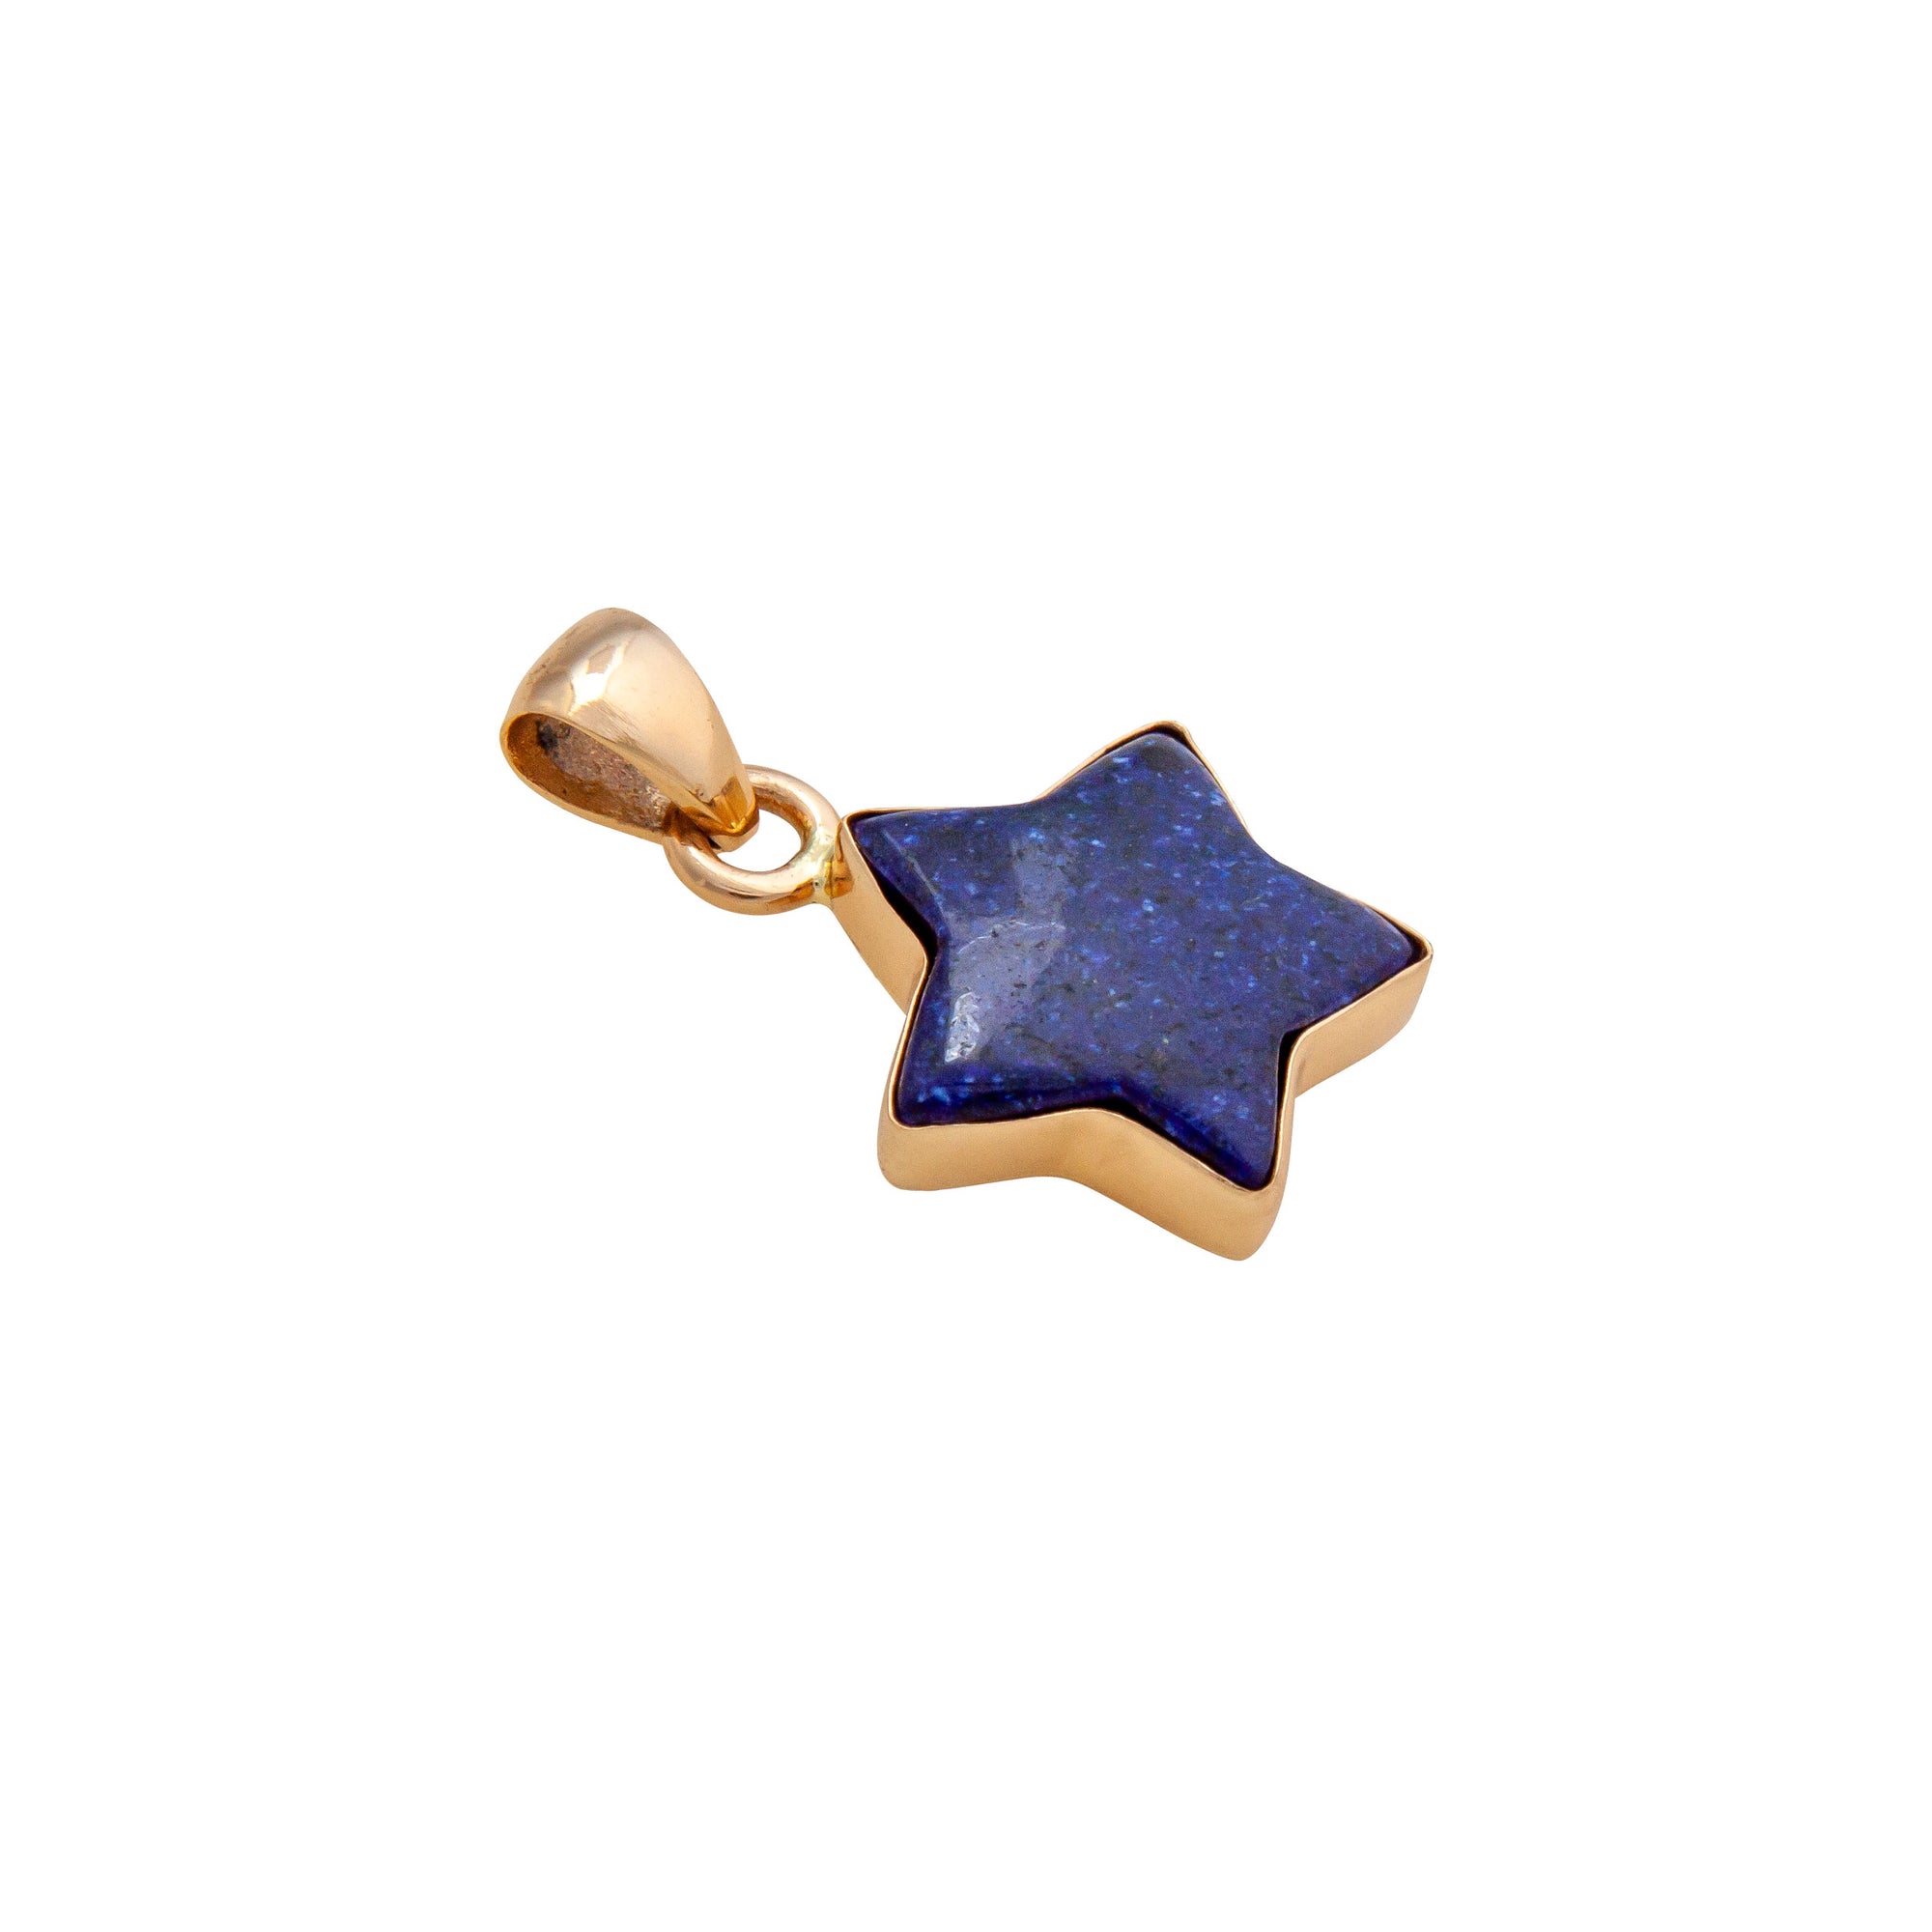 Alchemia Lapis Lazuli Star Pendant / Charles Albert Jewelry